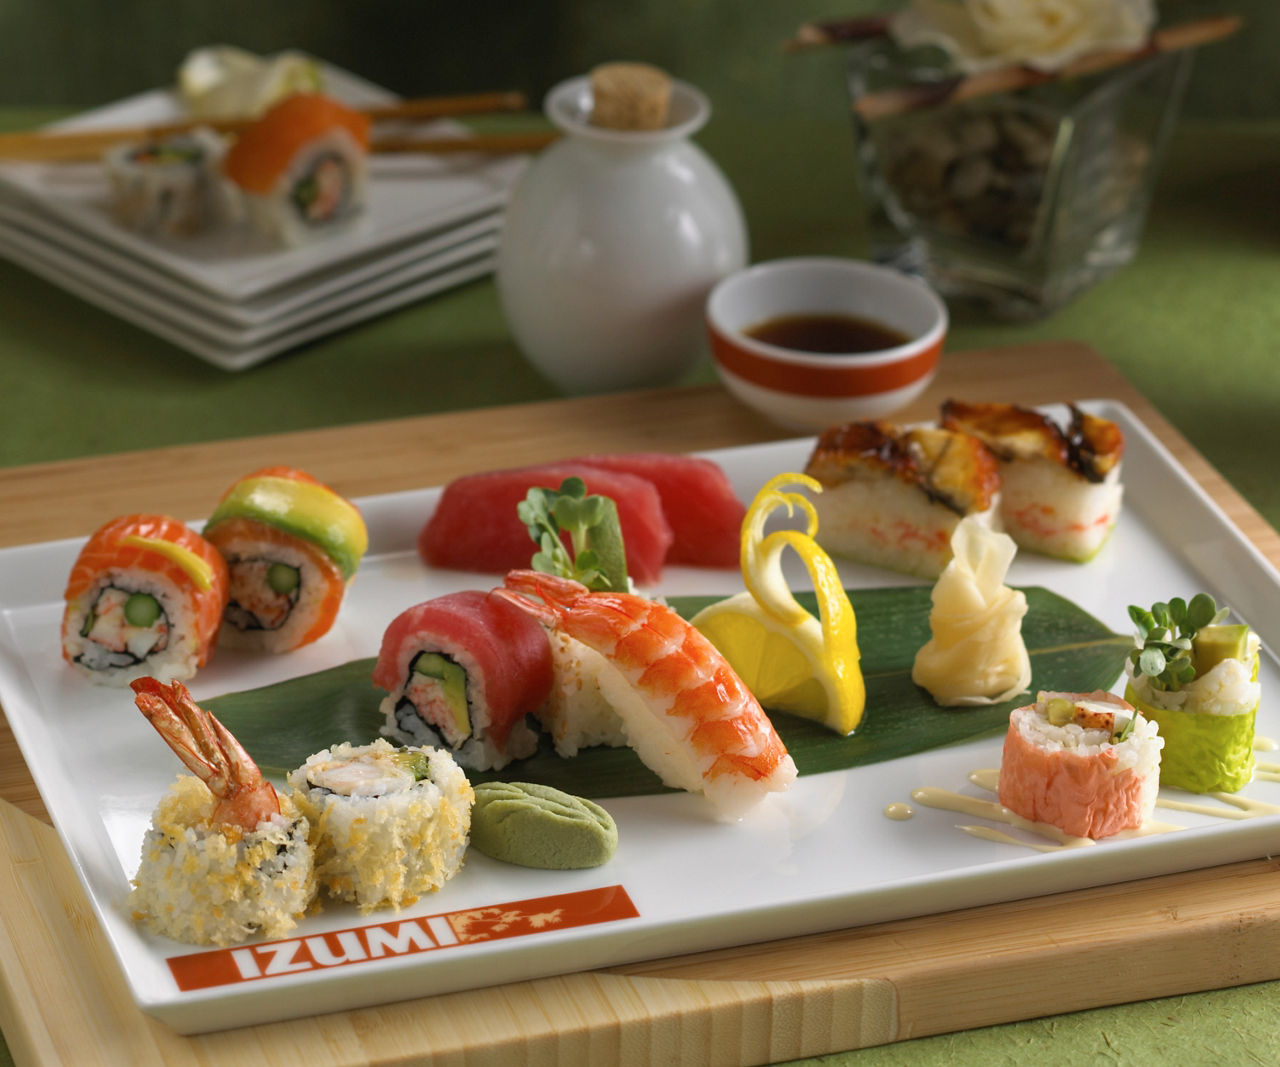 Plate of fresh assorted sushi and sashimi rolls.